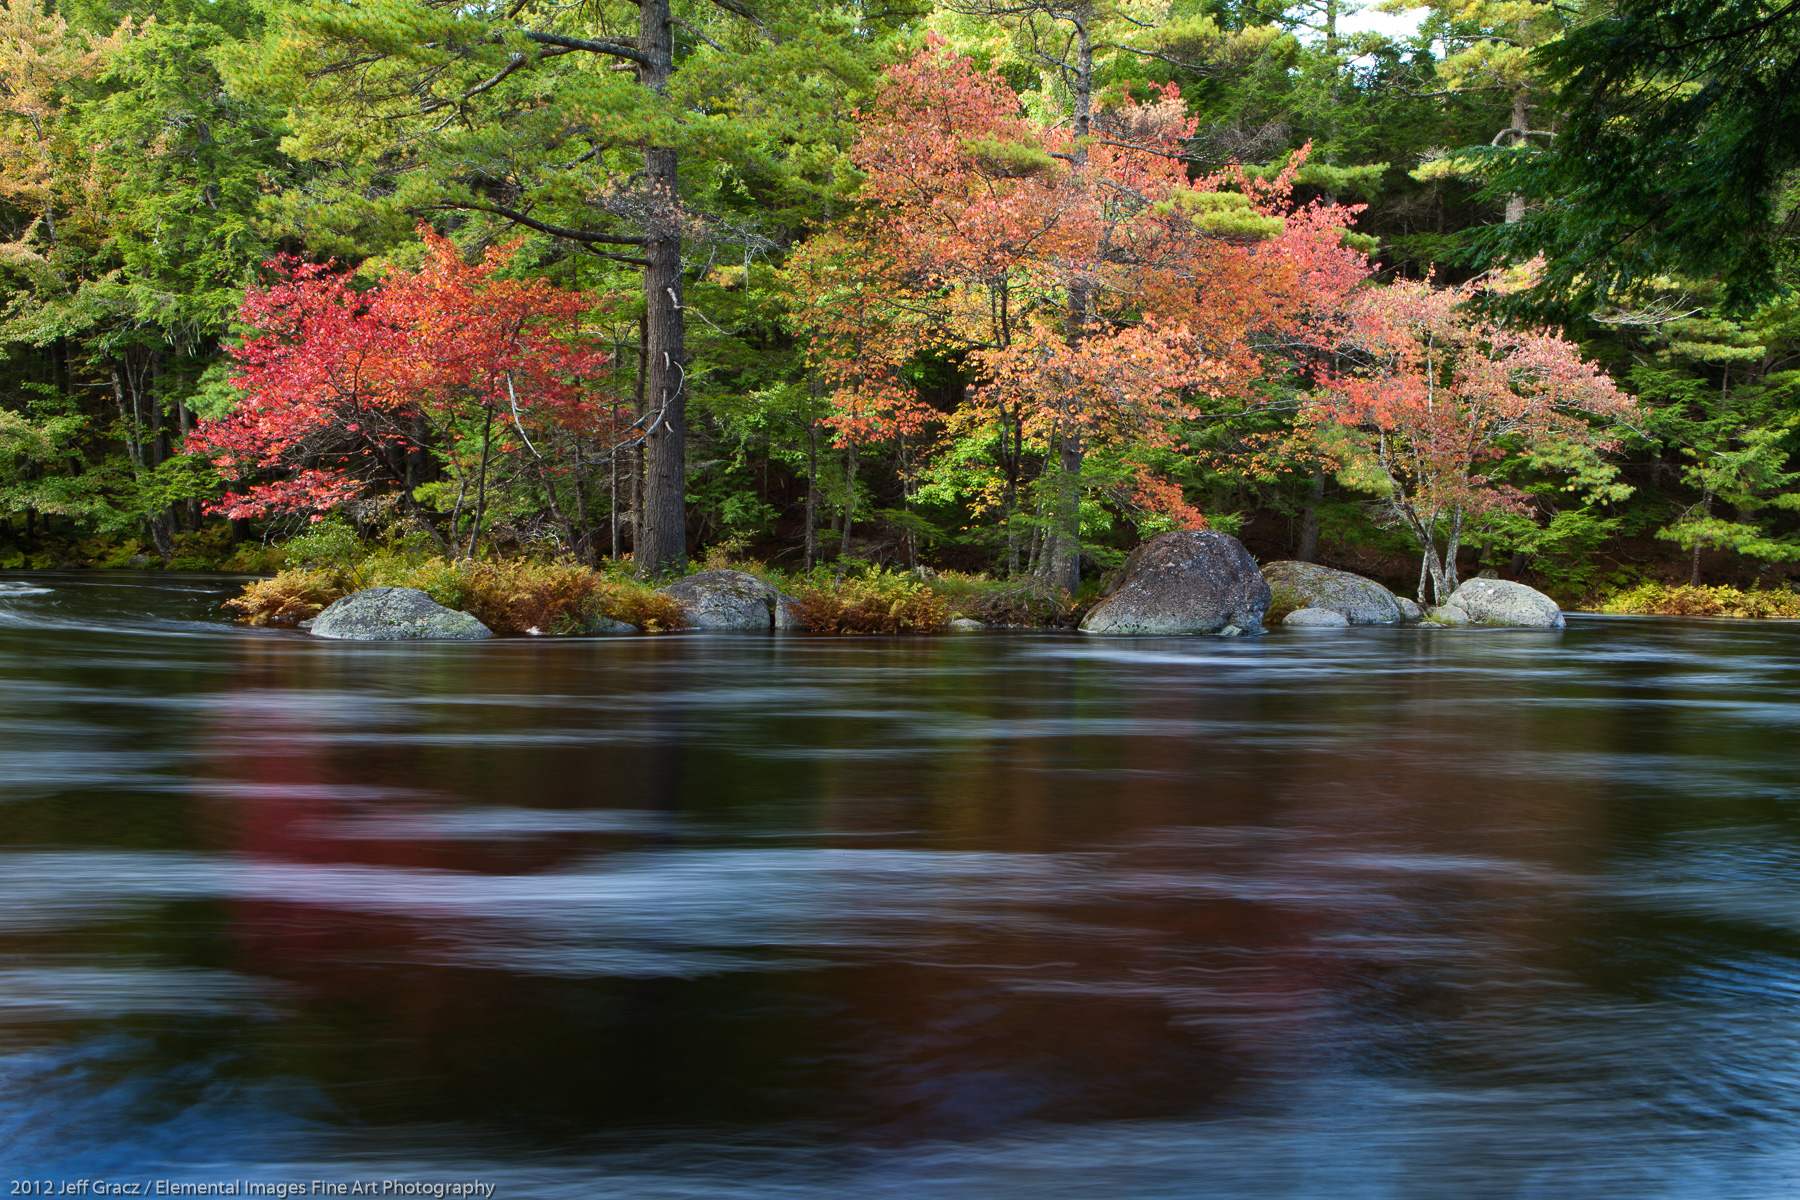 Mersey River Maples I | Kejimkujik National Park | Nova Scotia | Canada - © 2012 Jeff Gracz / Elemental Images Fine Art Photography - All Rights Reserved Worldwide